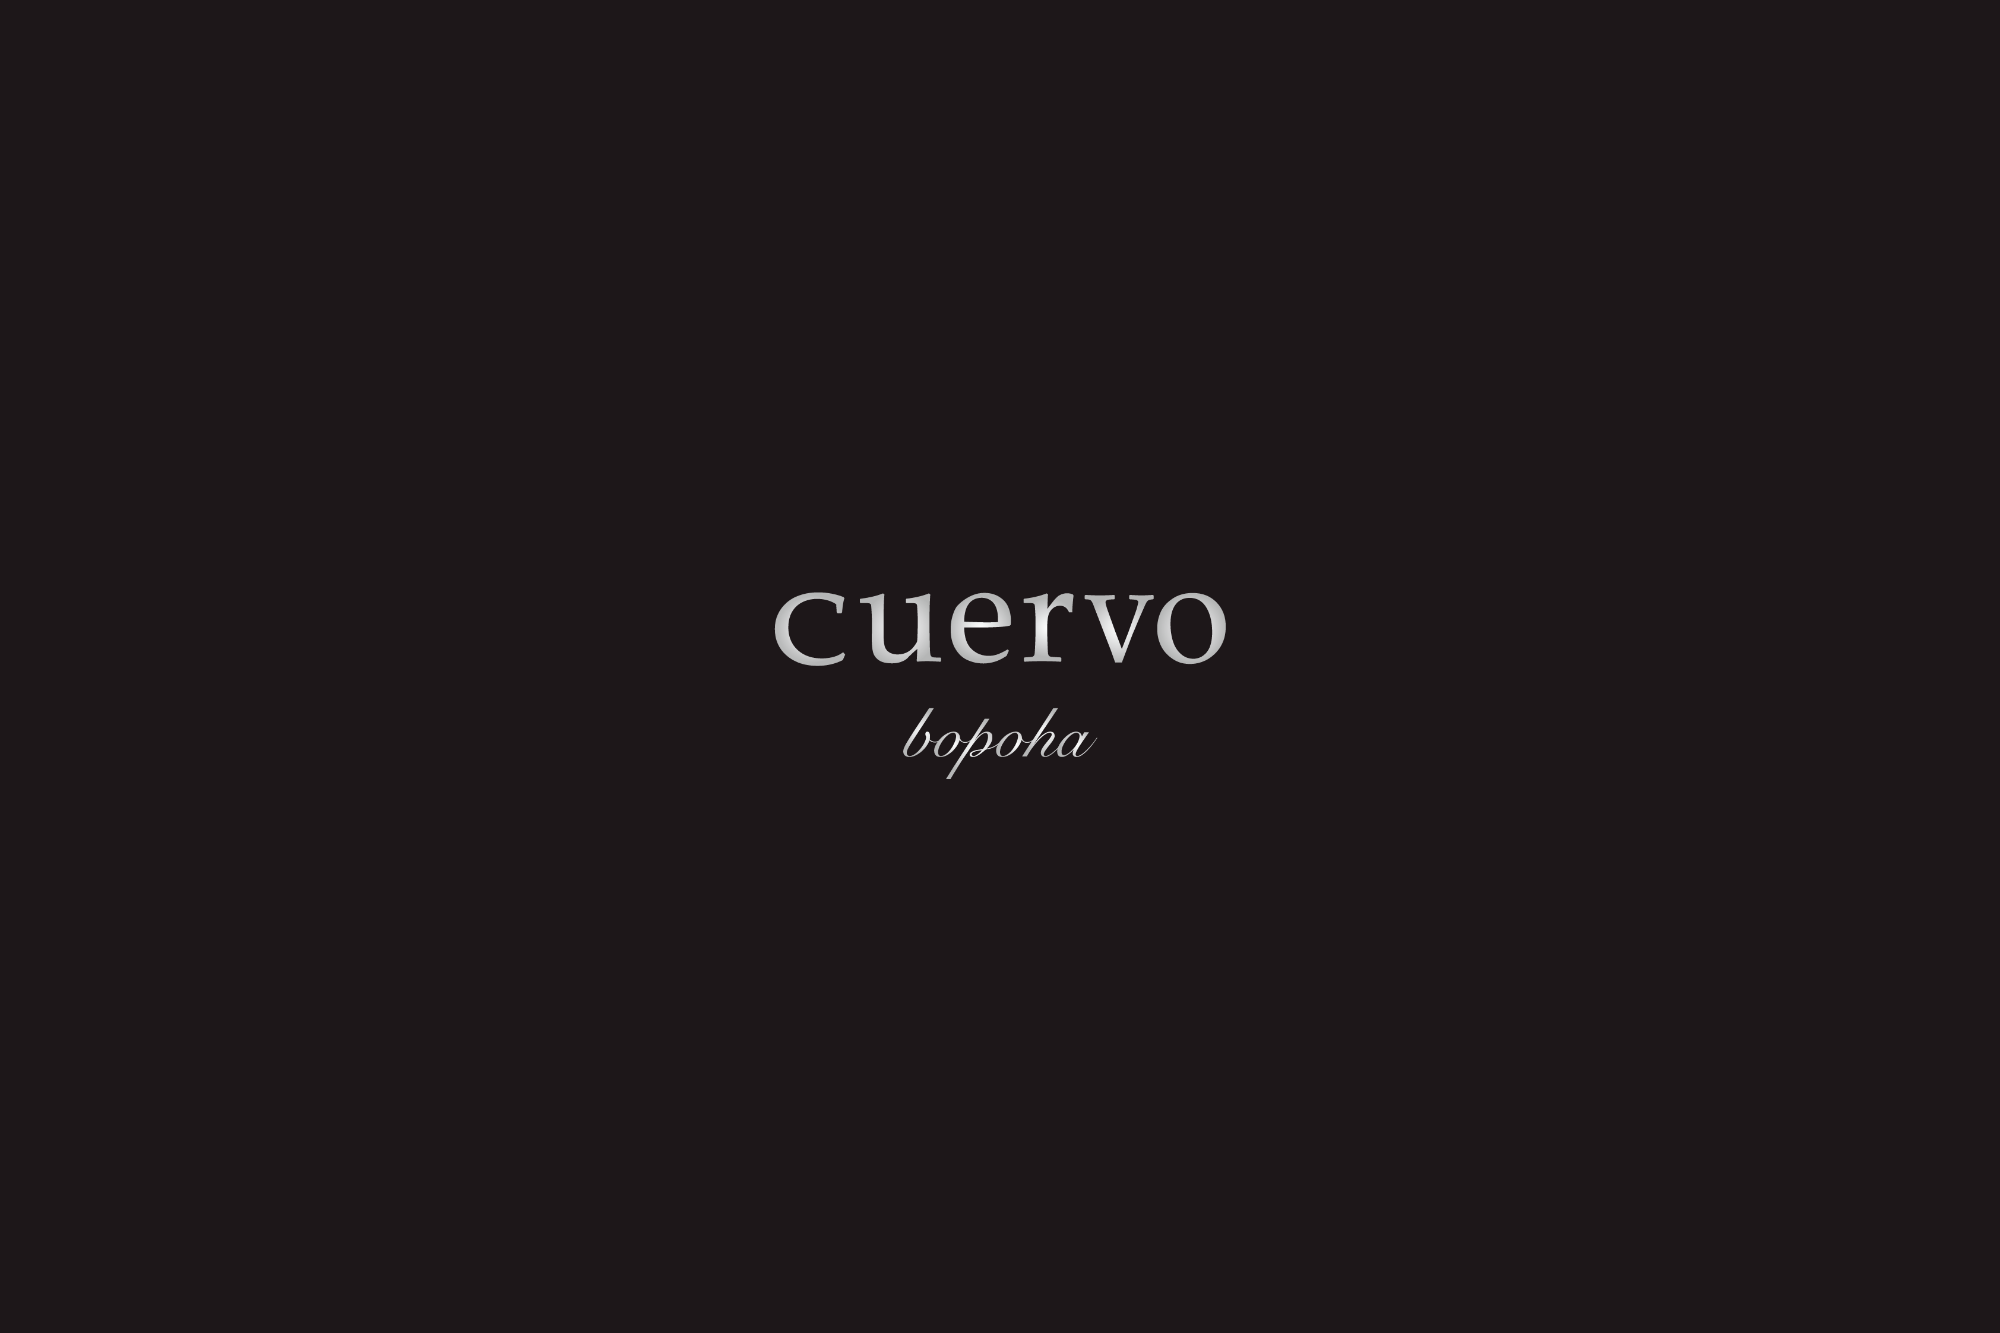 cuervo bopoha / クエルボ ヴァローナのブランド画像